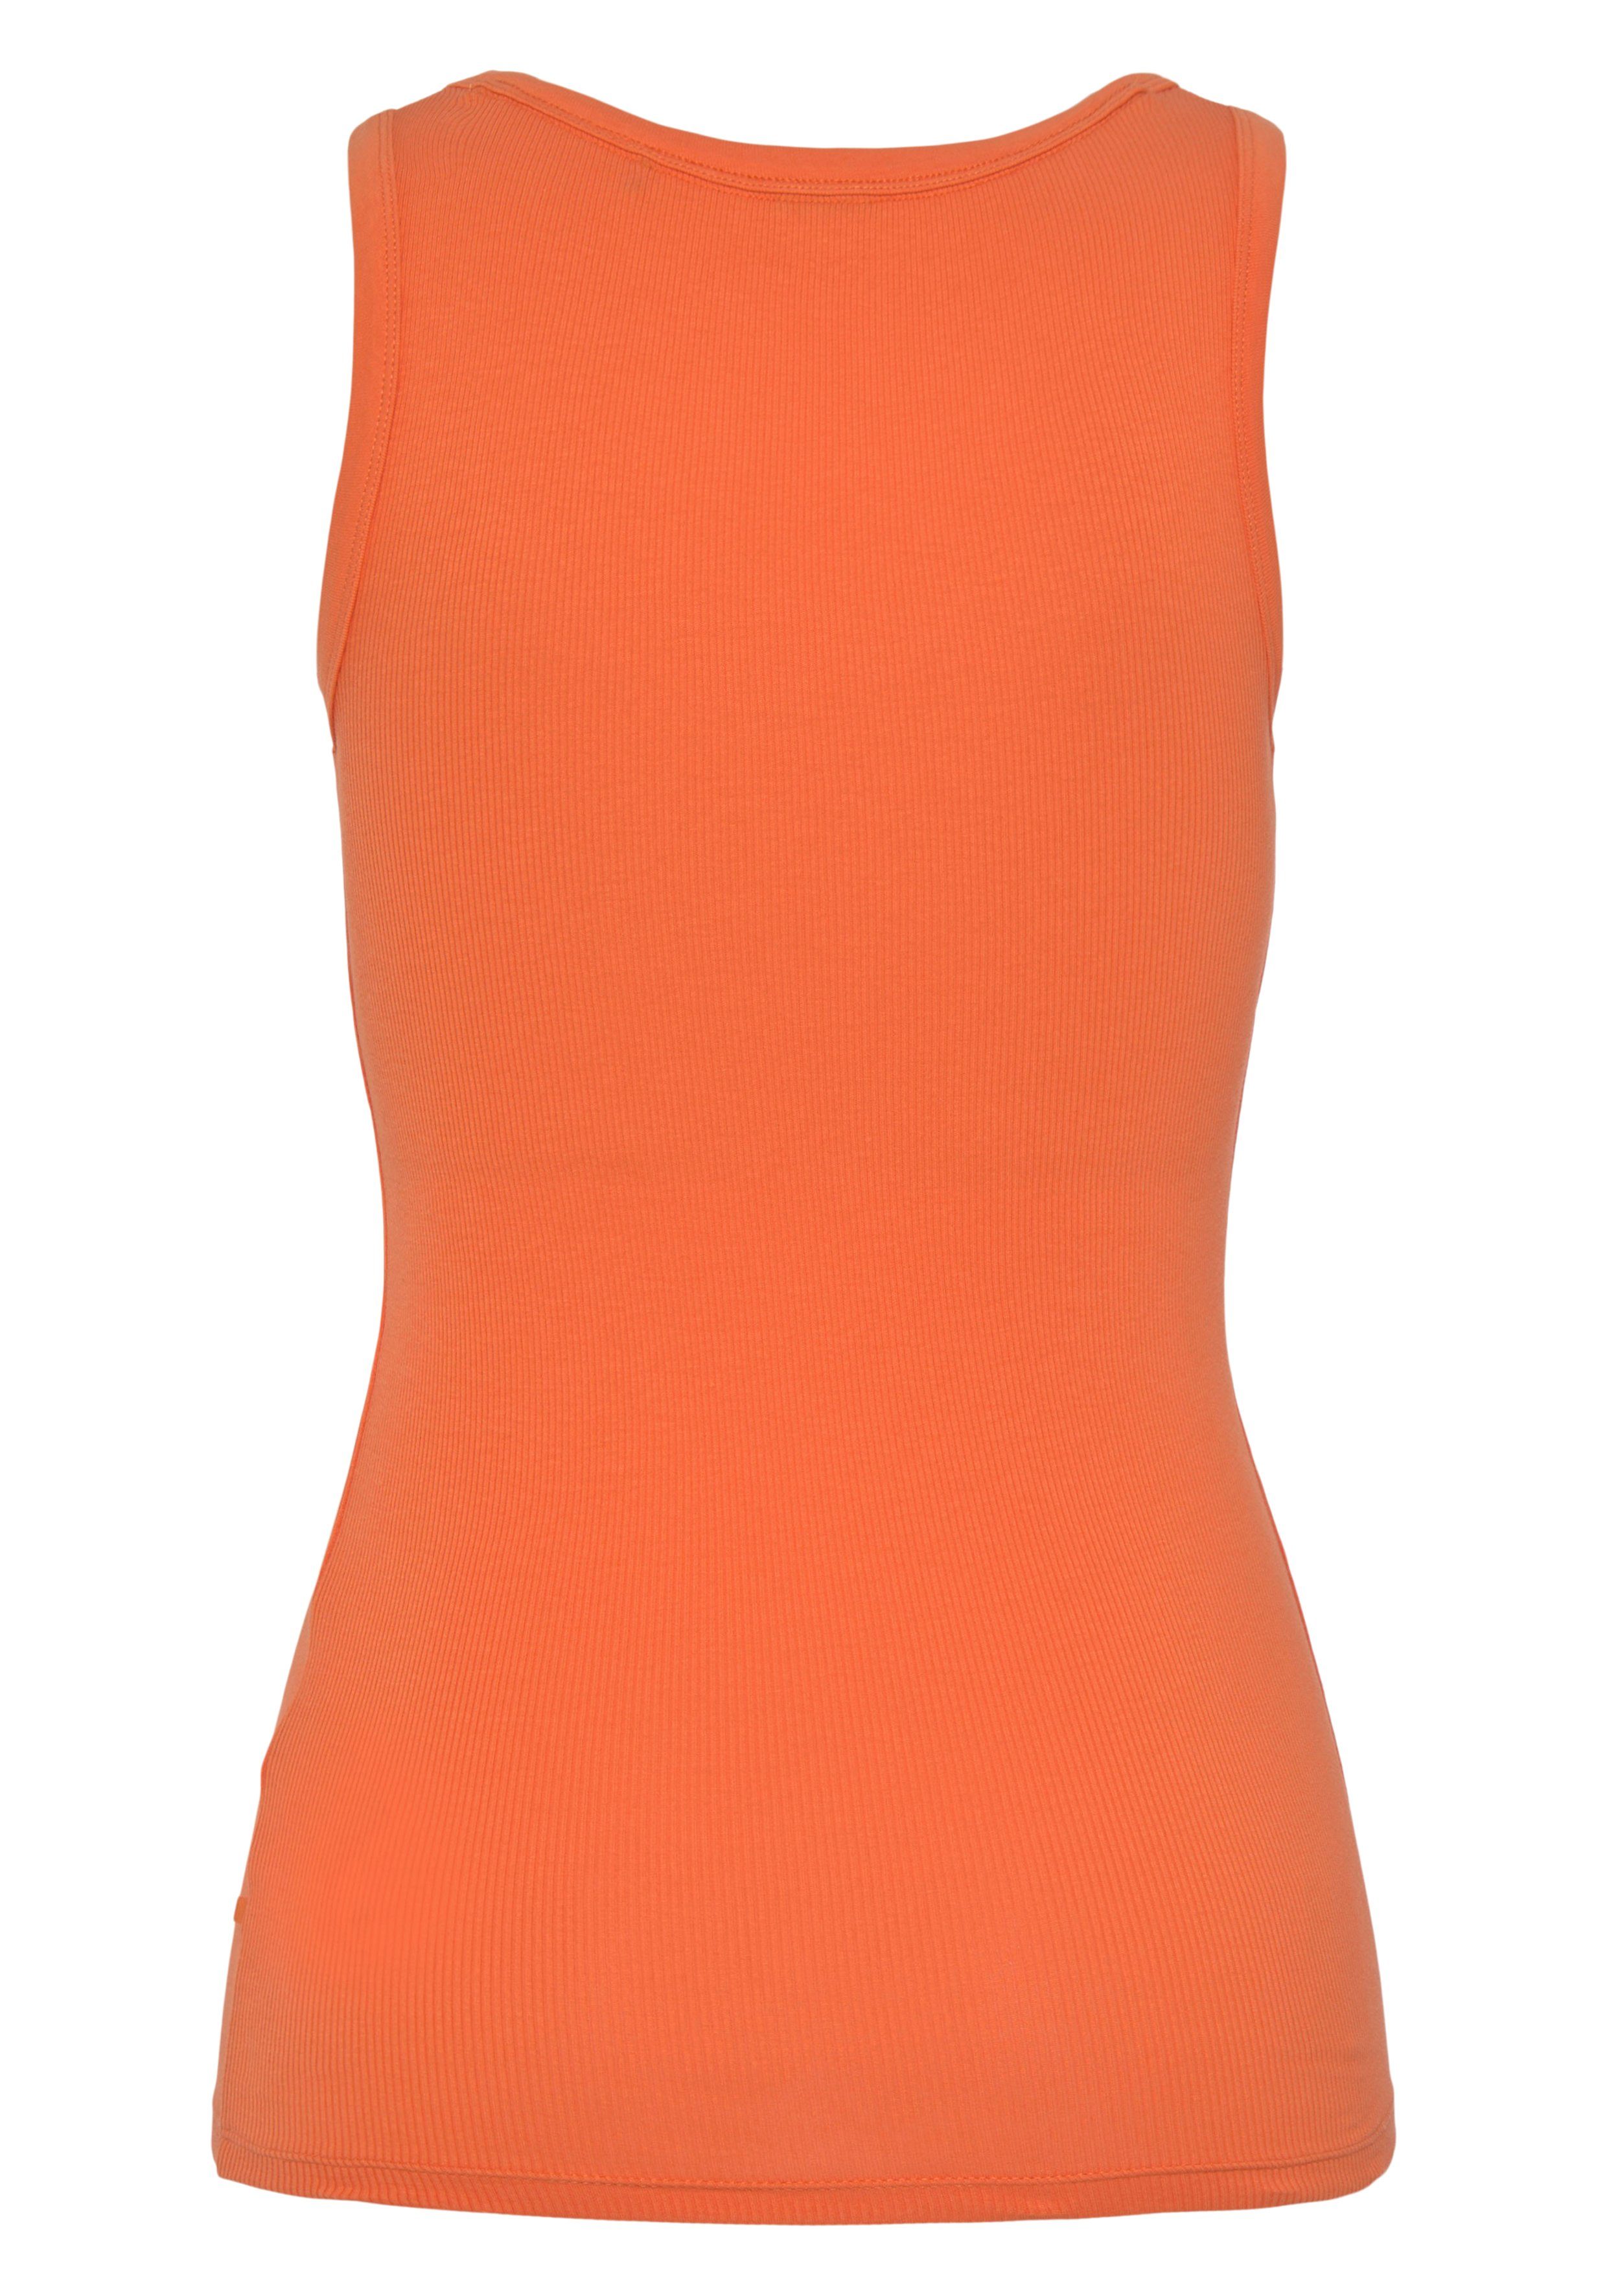 HUGO BOSS ORANGE Muskelshirt mit Markenstreifen innen BOSS Bright_Orange